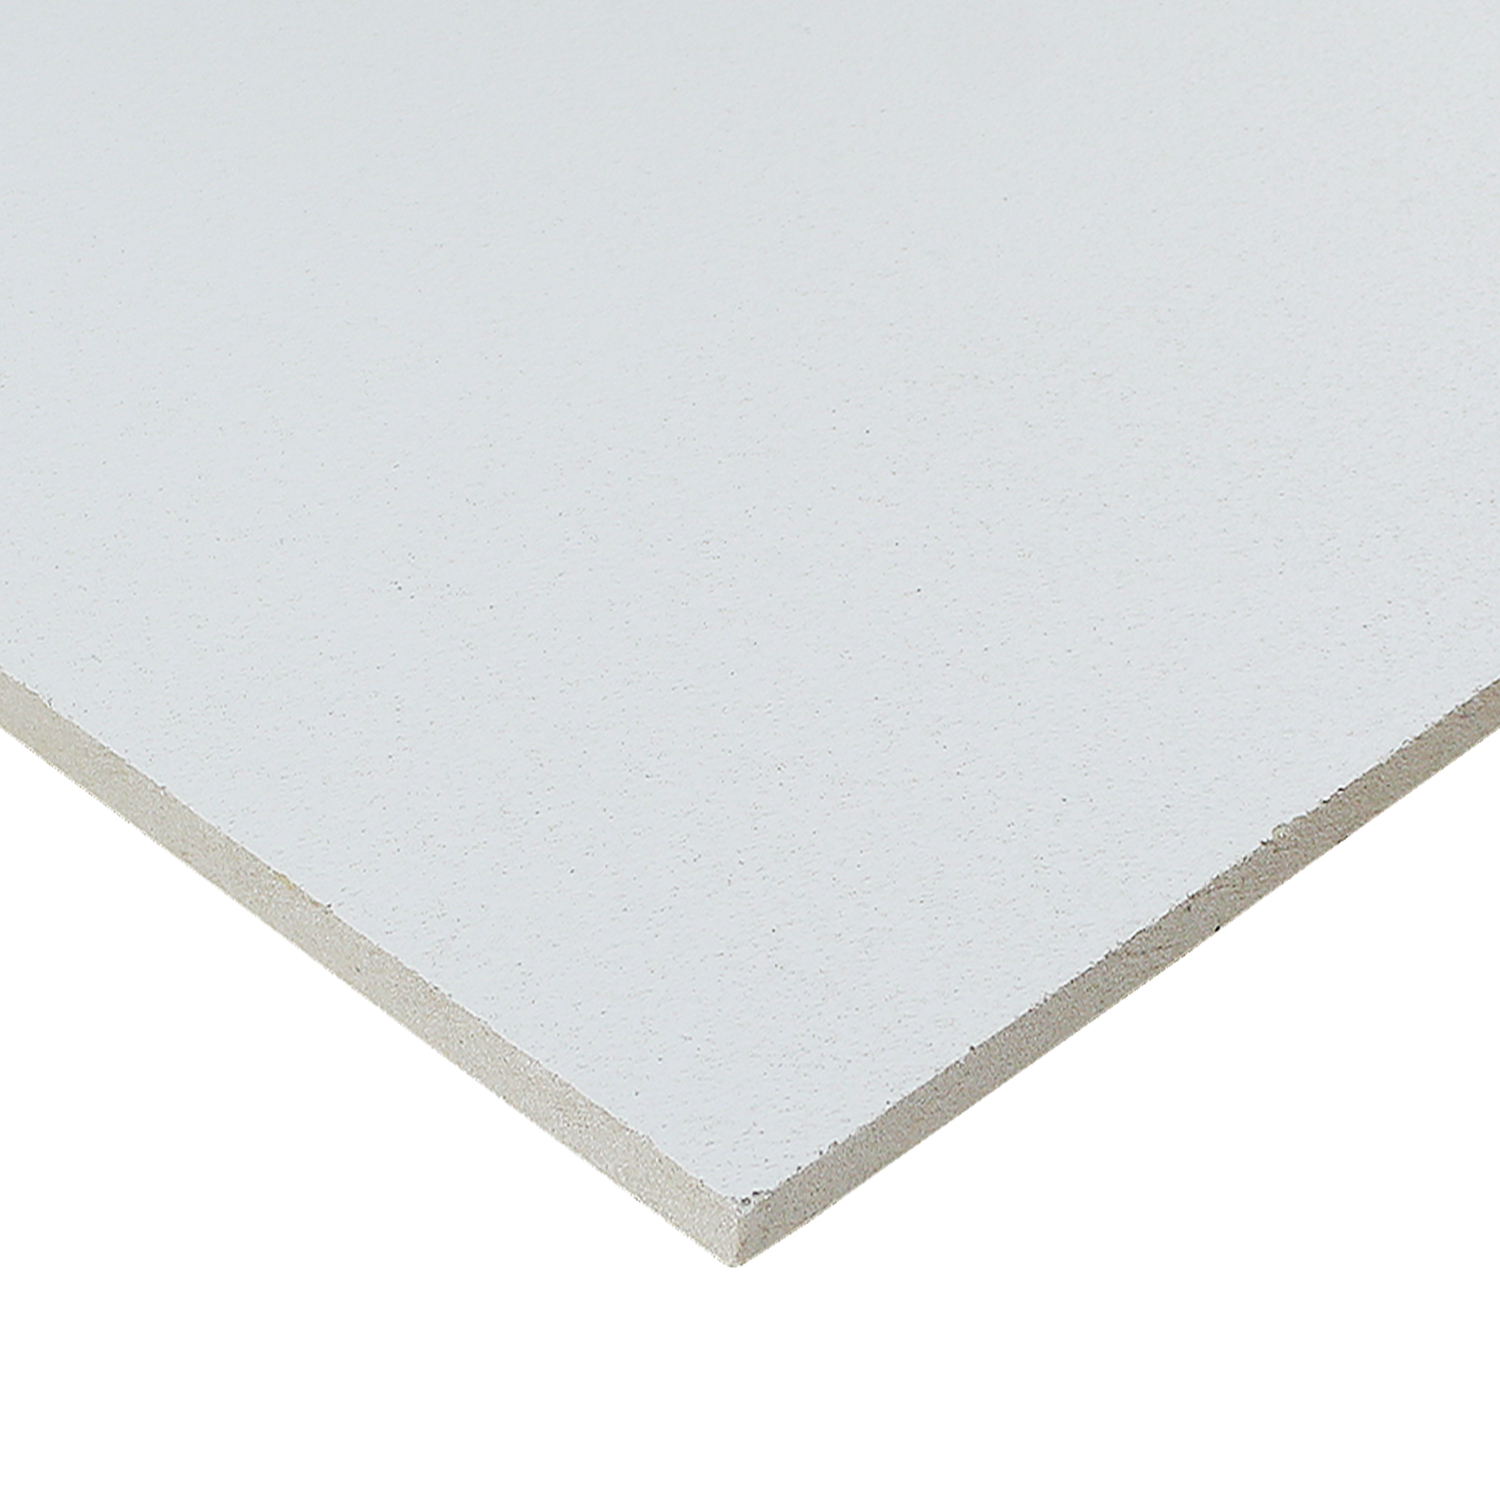 SAHARA flat unperforated Ceiling Tiles 600mm x 600mm (Box Qty: 12)